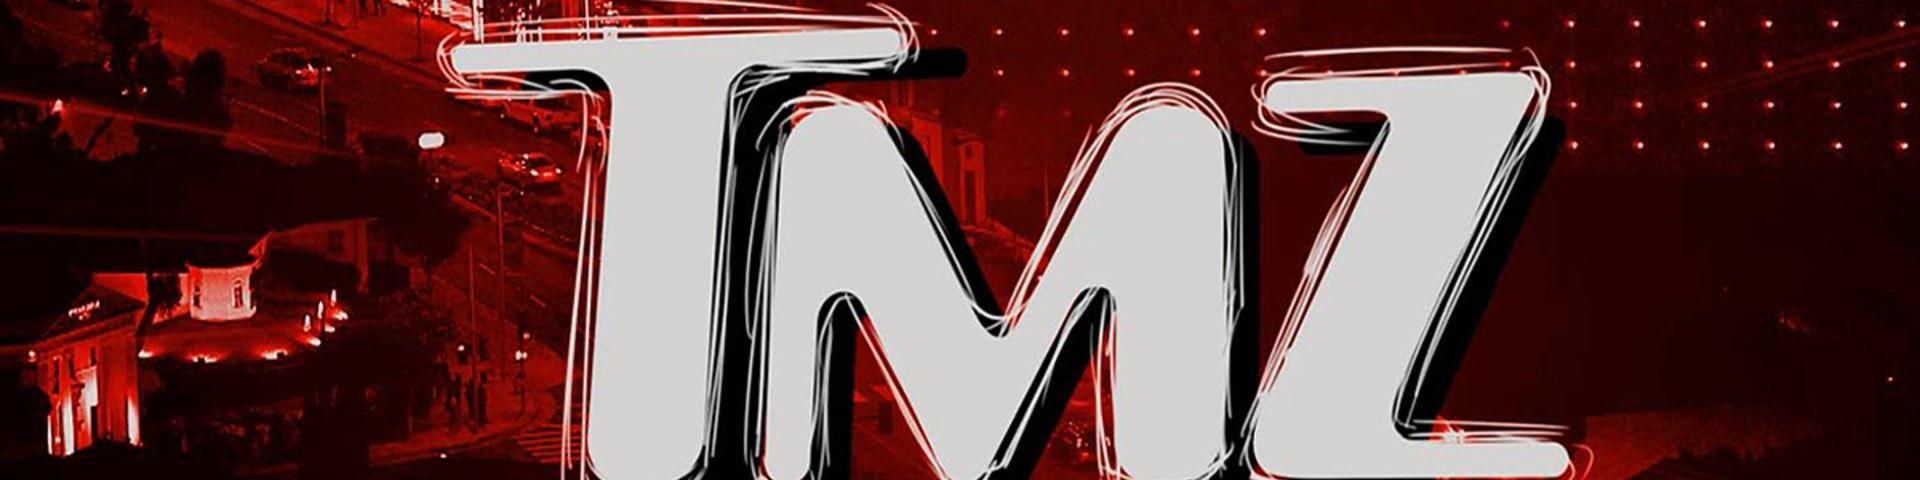 TMZ Logo - WarnerBros.com. TMZ